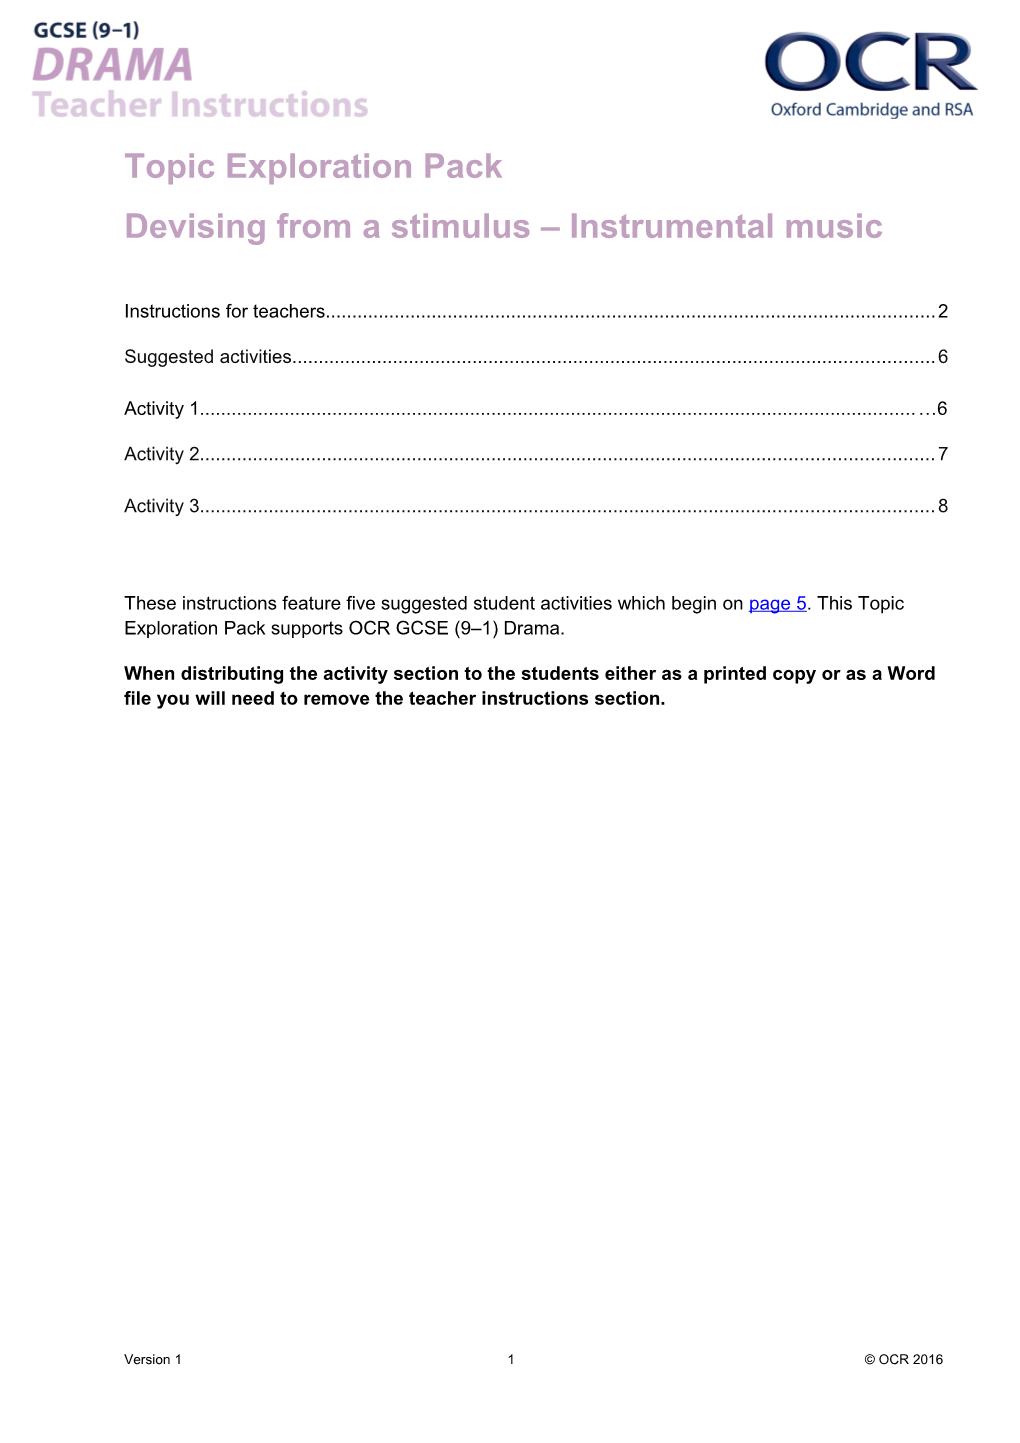 GCSE (9-1) Drama TEP - Devising from a Stimulus Instrumental Music